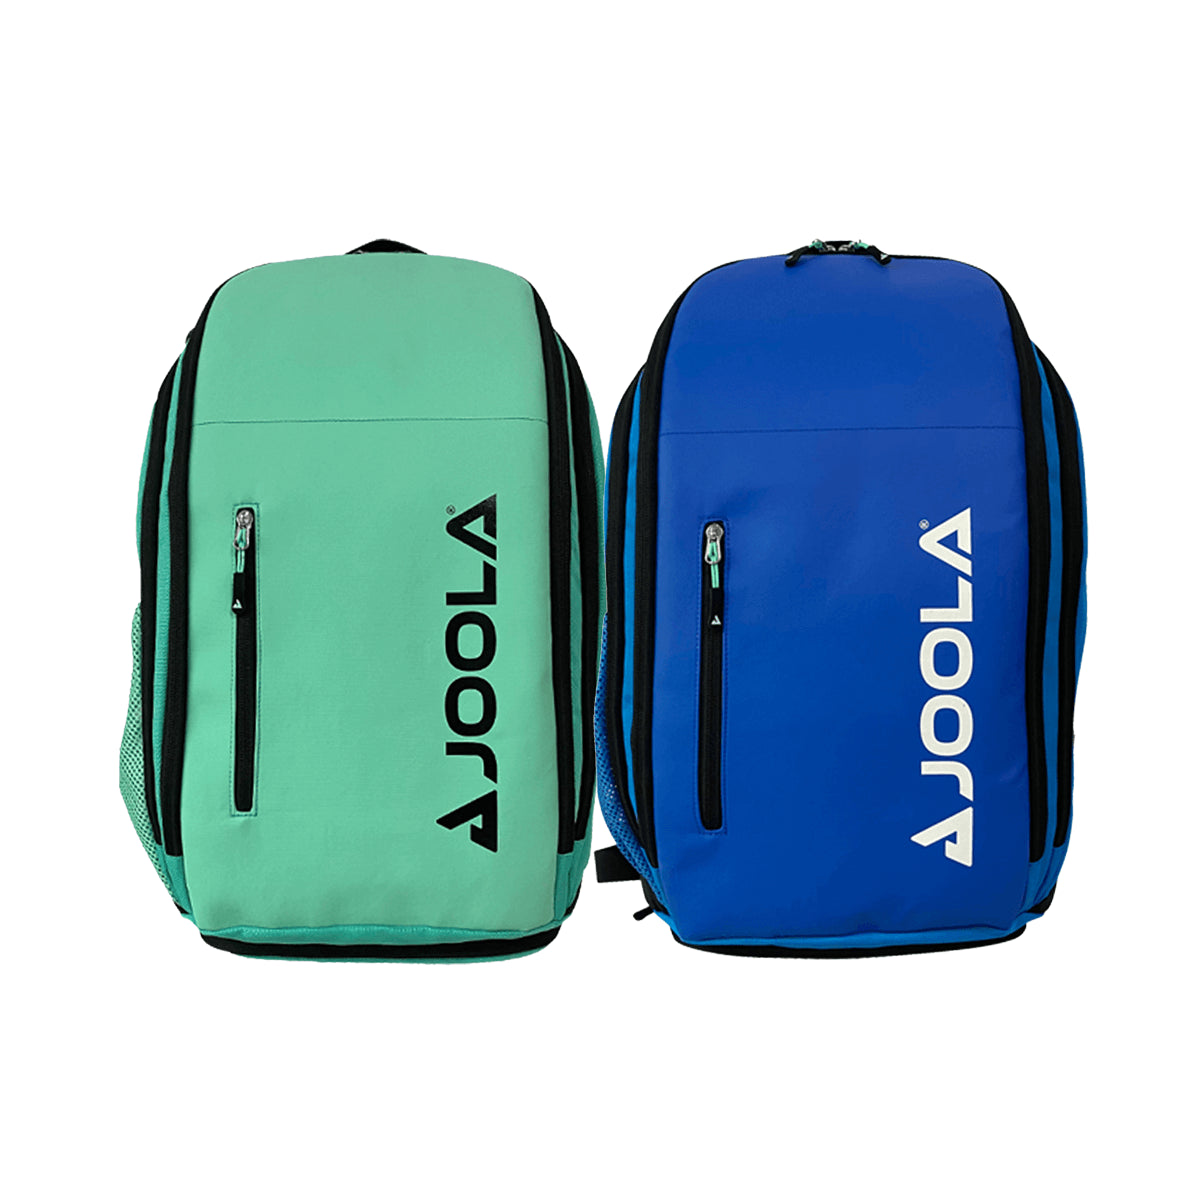 JOOLA VISION II Backpack